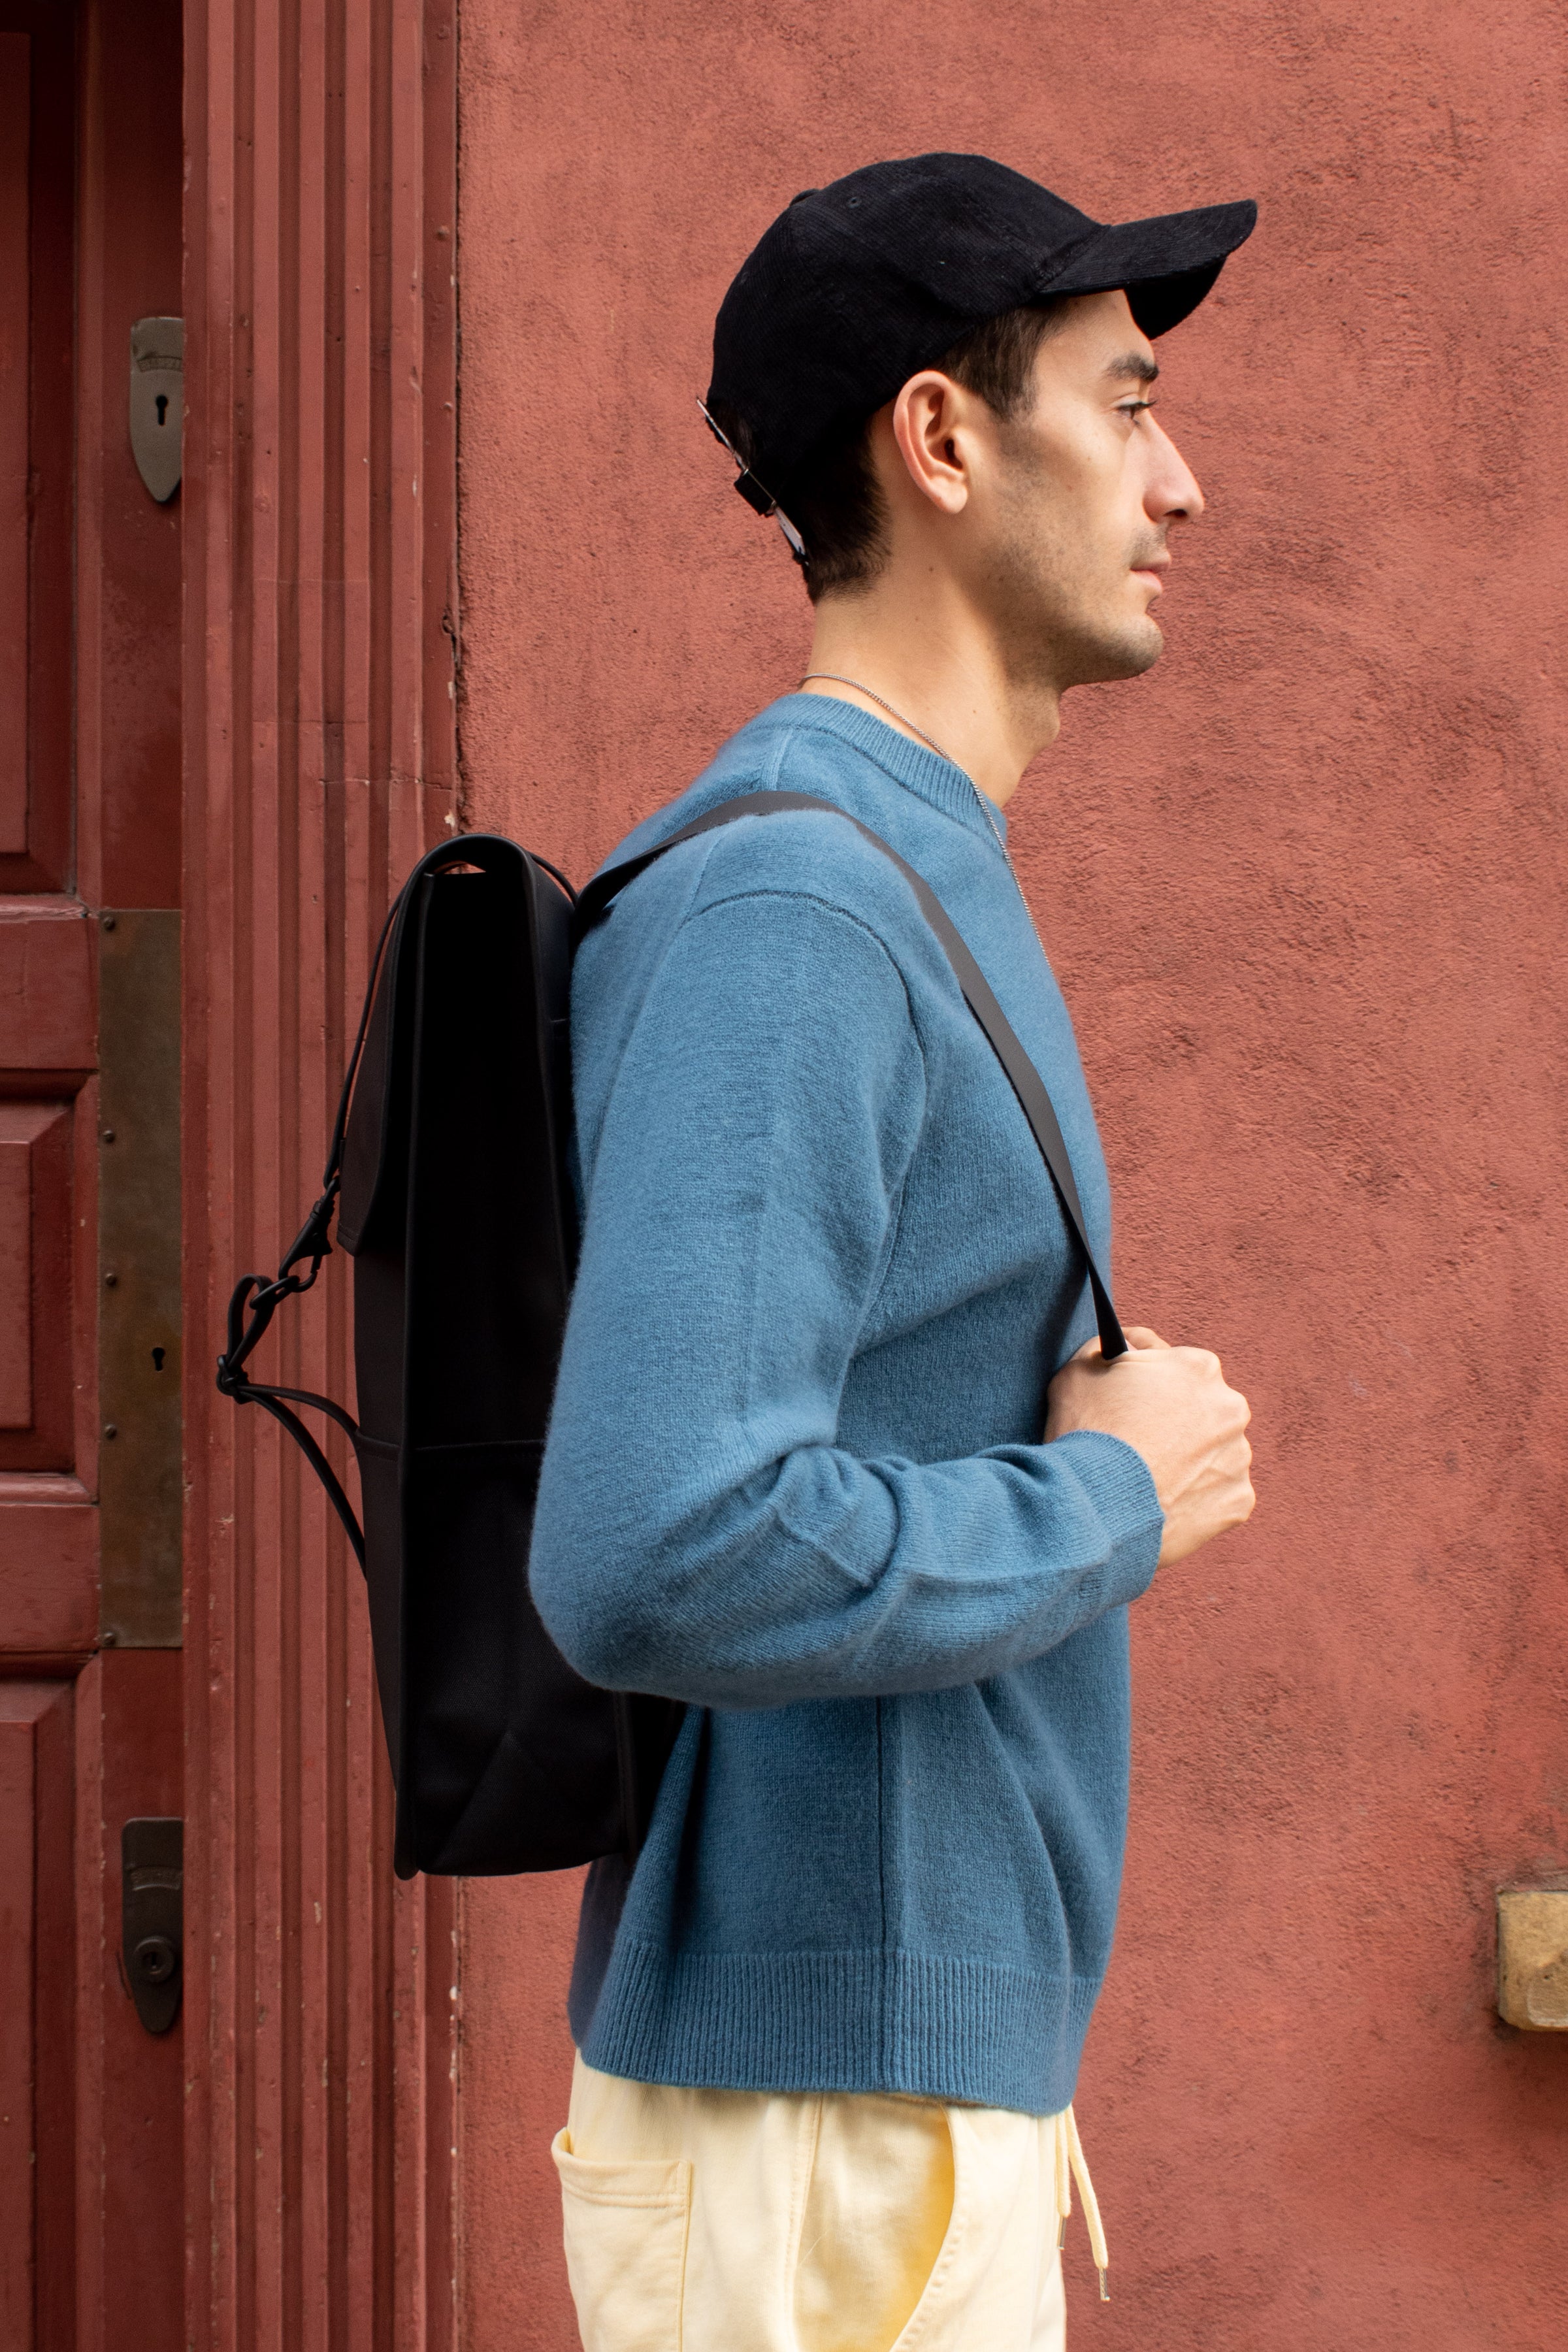 A Sleek & Simple Bag Inspired By Old School Rucksacks - The Rains MSN Bag -  YouTube